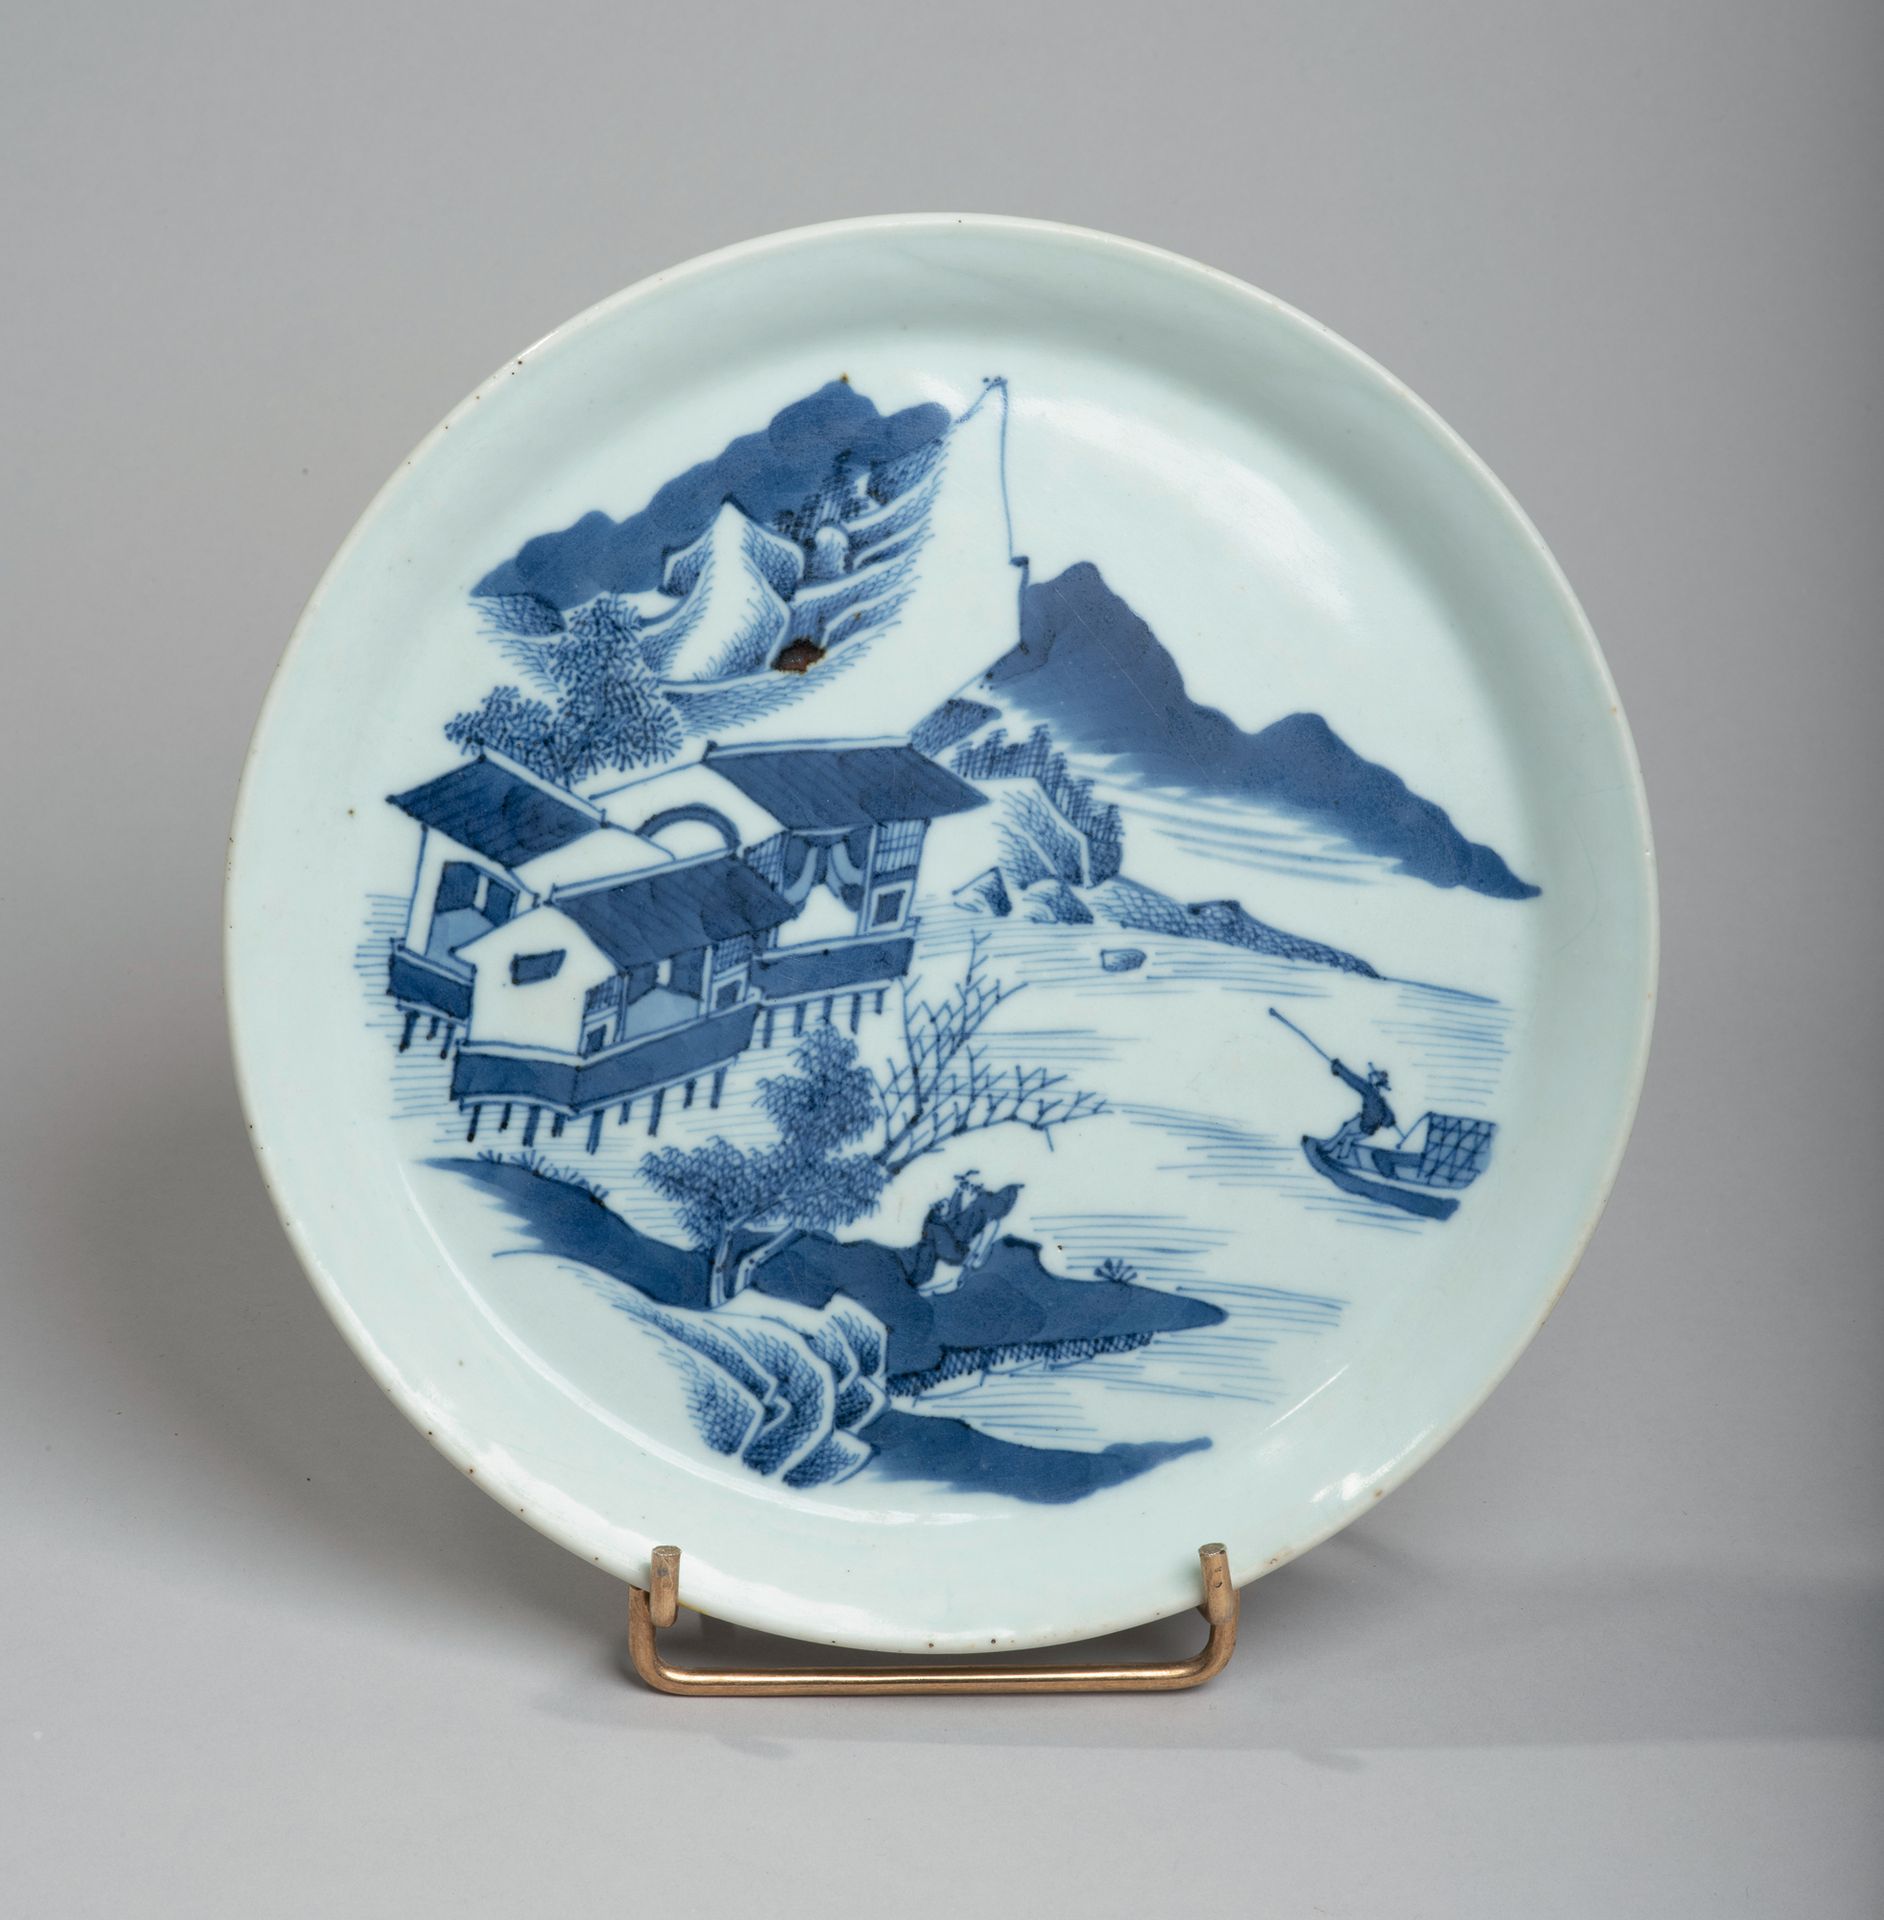 VIETNAM, Hue - XVIIIe/XIXe siècle 
Porcelain cup decorated in blue underglaze wi&hellip;